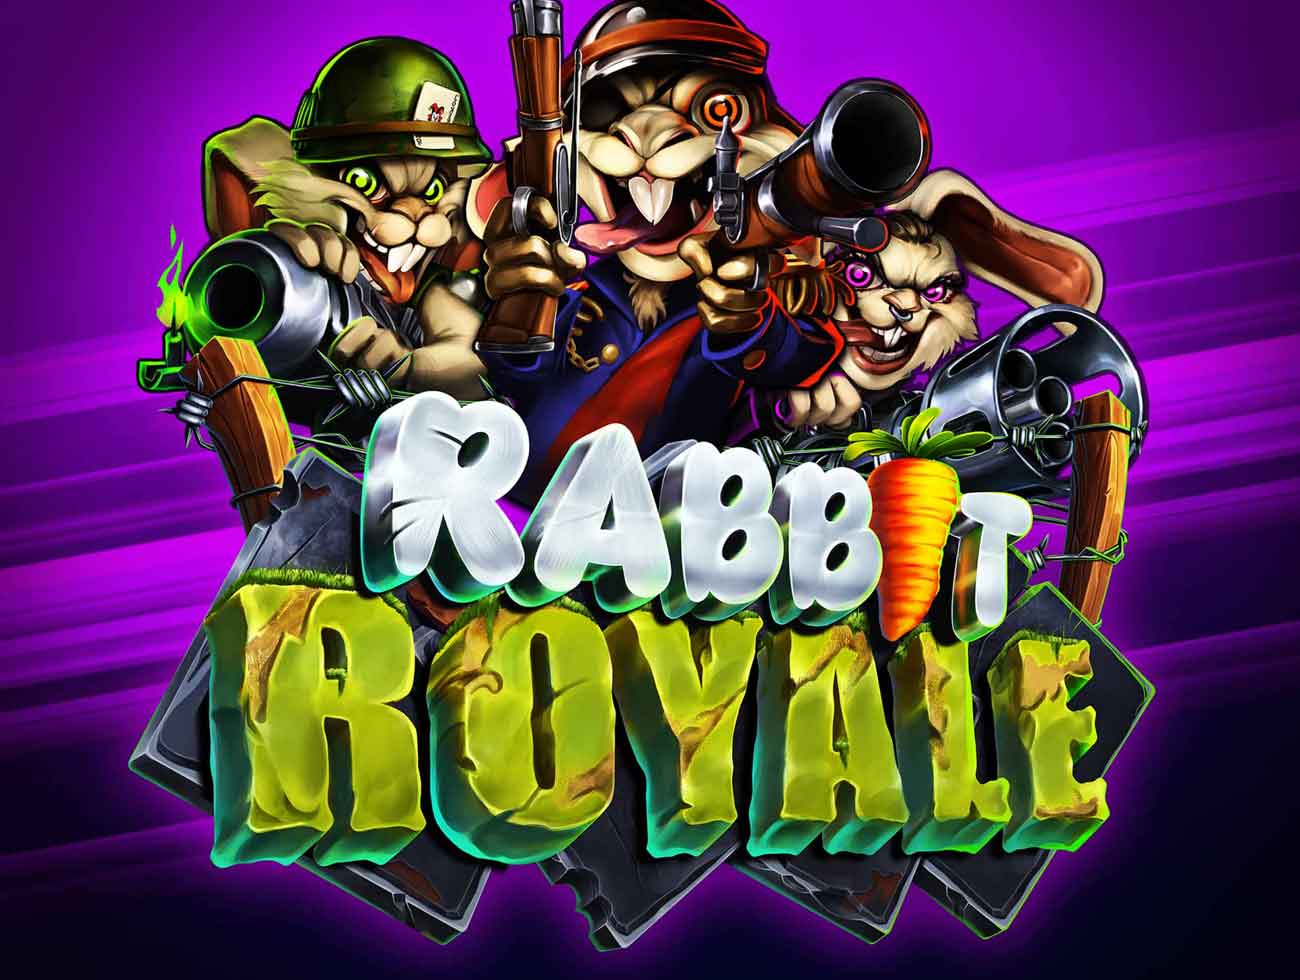 
                    Rabbit Royale